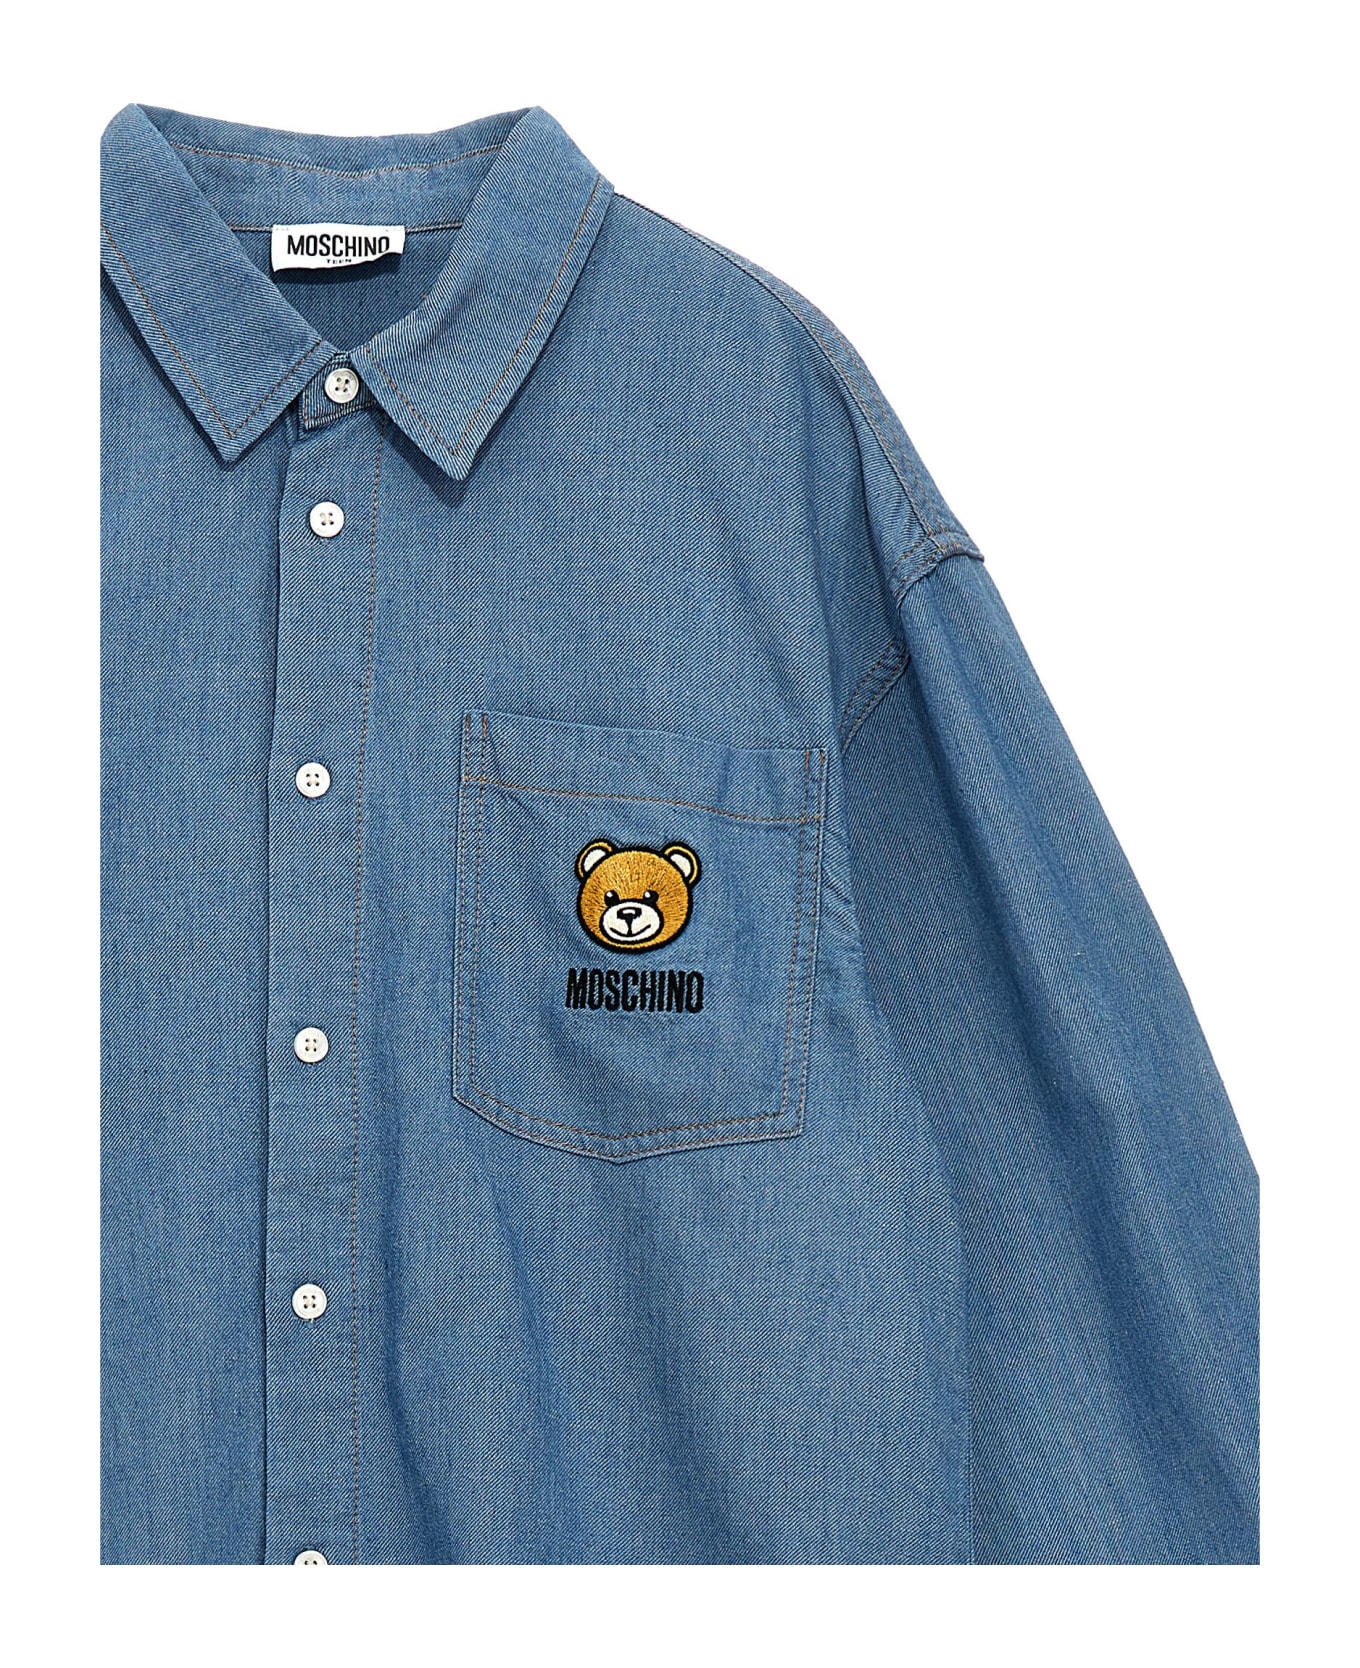 Moschino Logo Embroidery Shirt - Light Blue